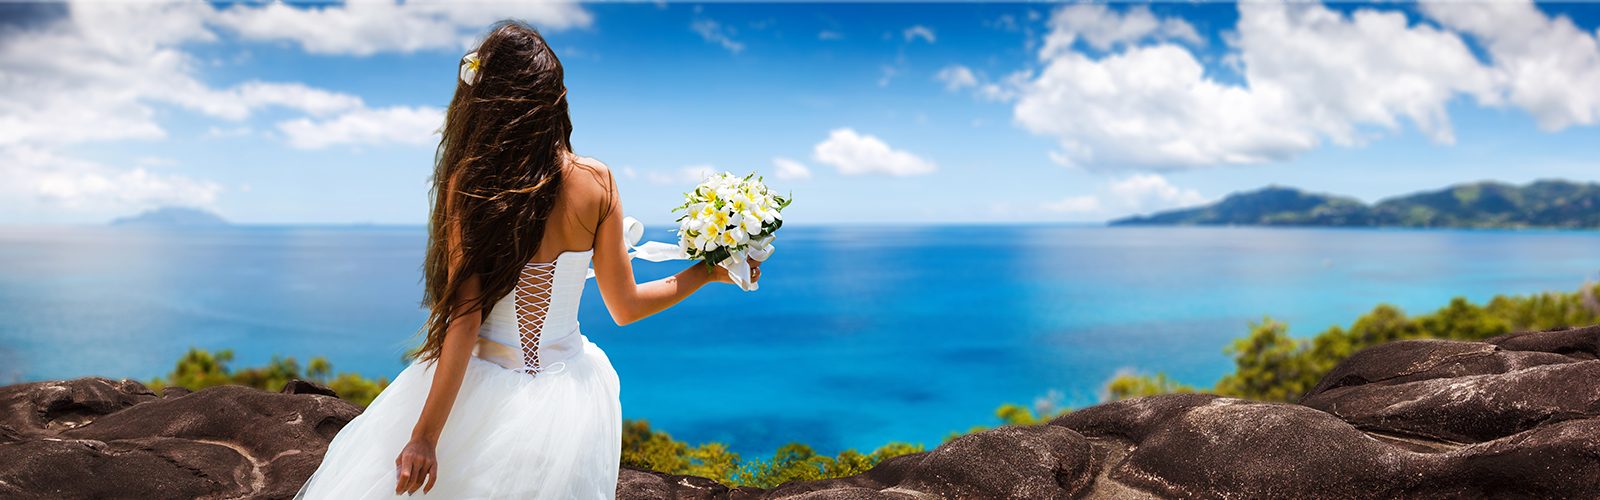 Beach Weddings Abroad How To Choose The Perfect Beach Wedding Dress